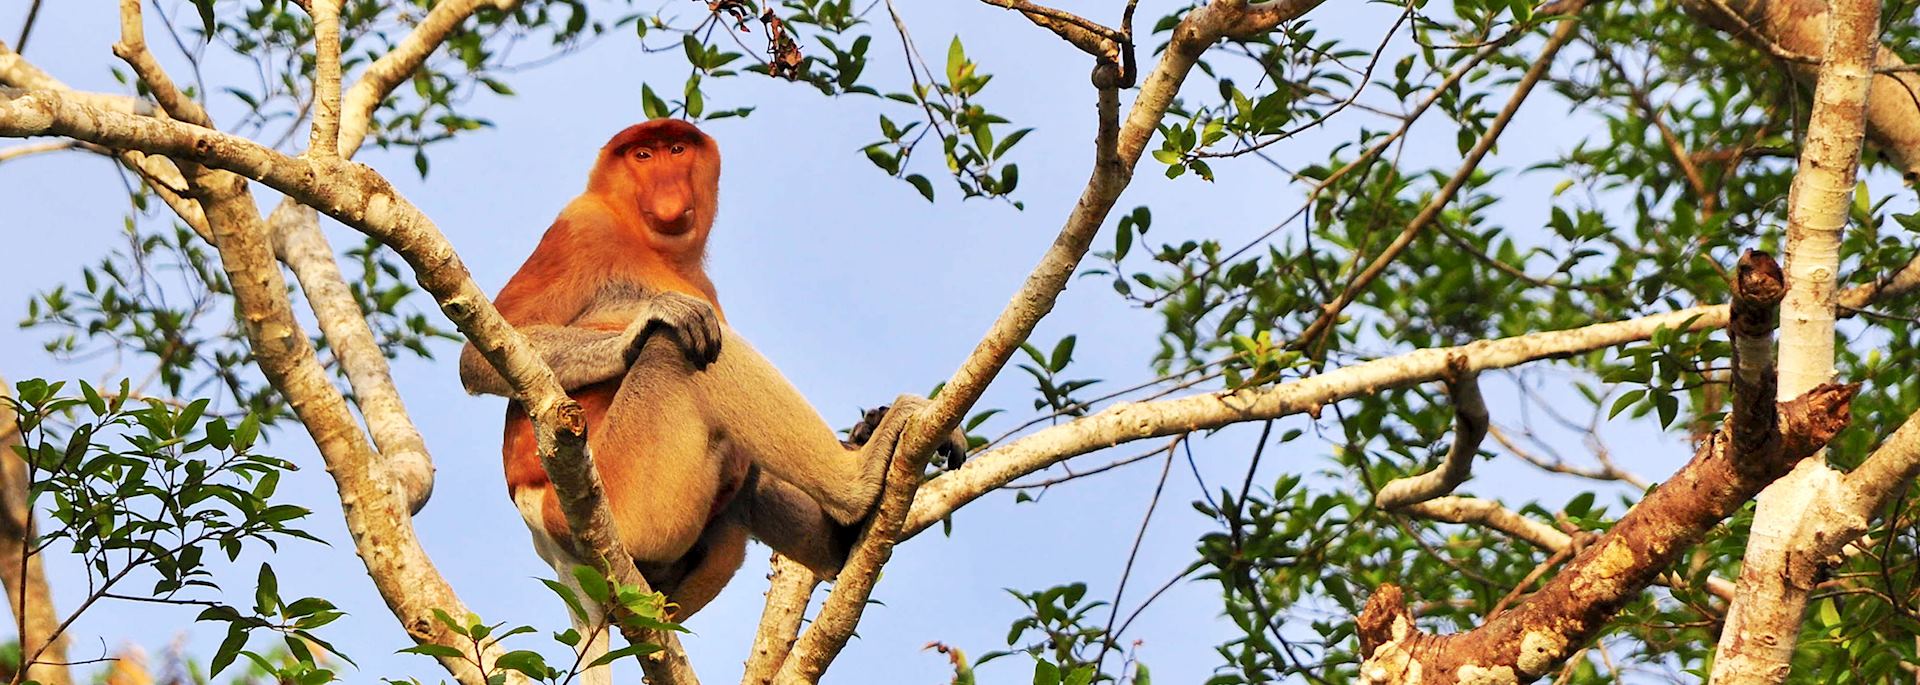 Proboscis monkey, Kinabatangan River